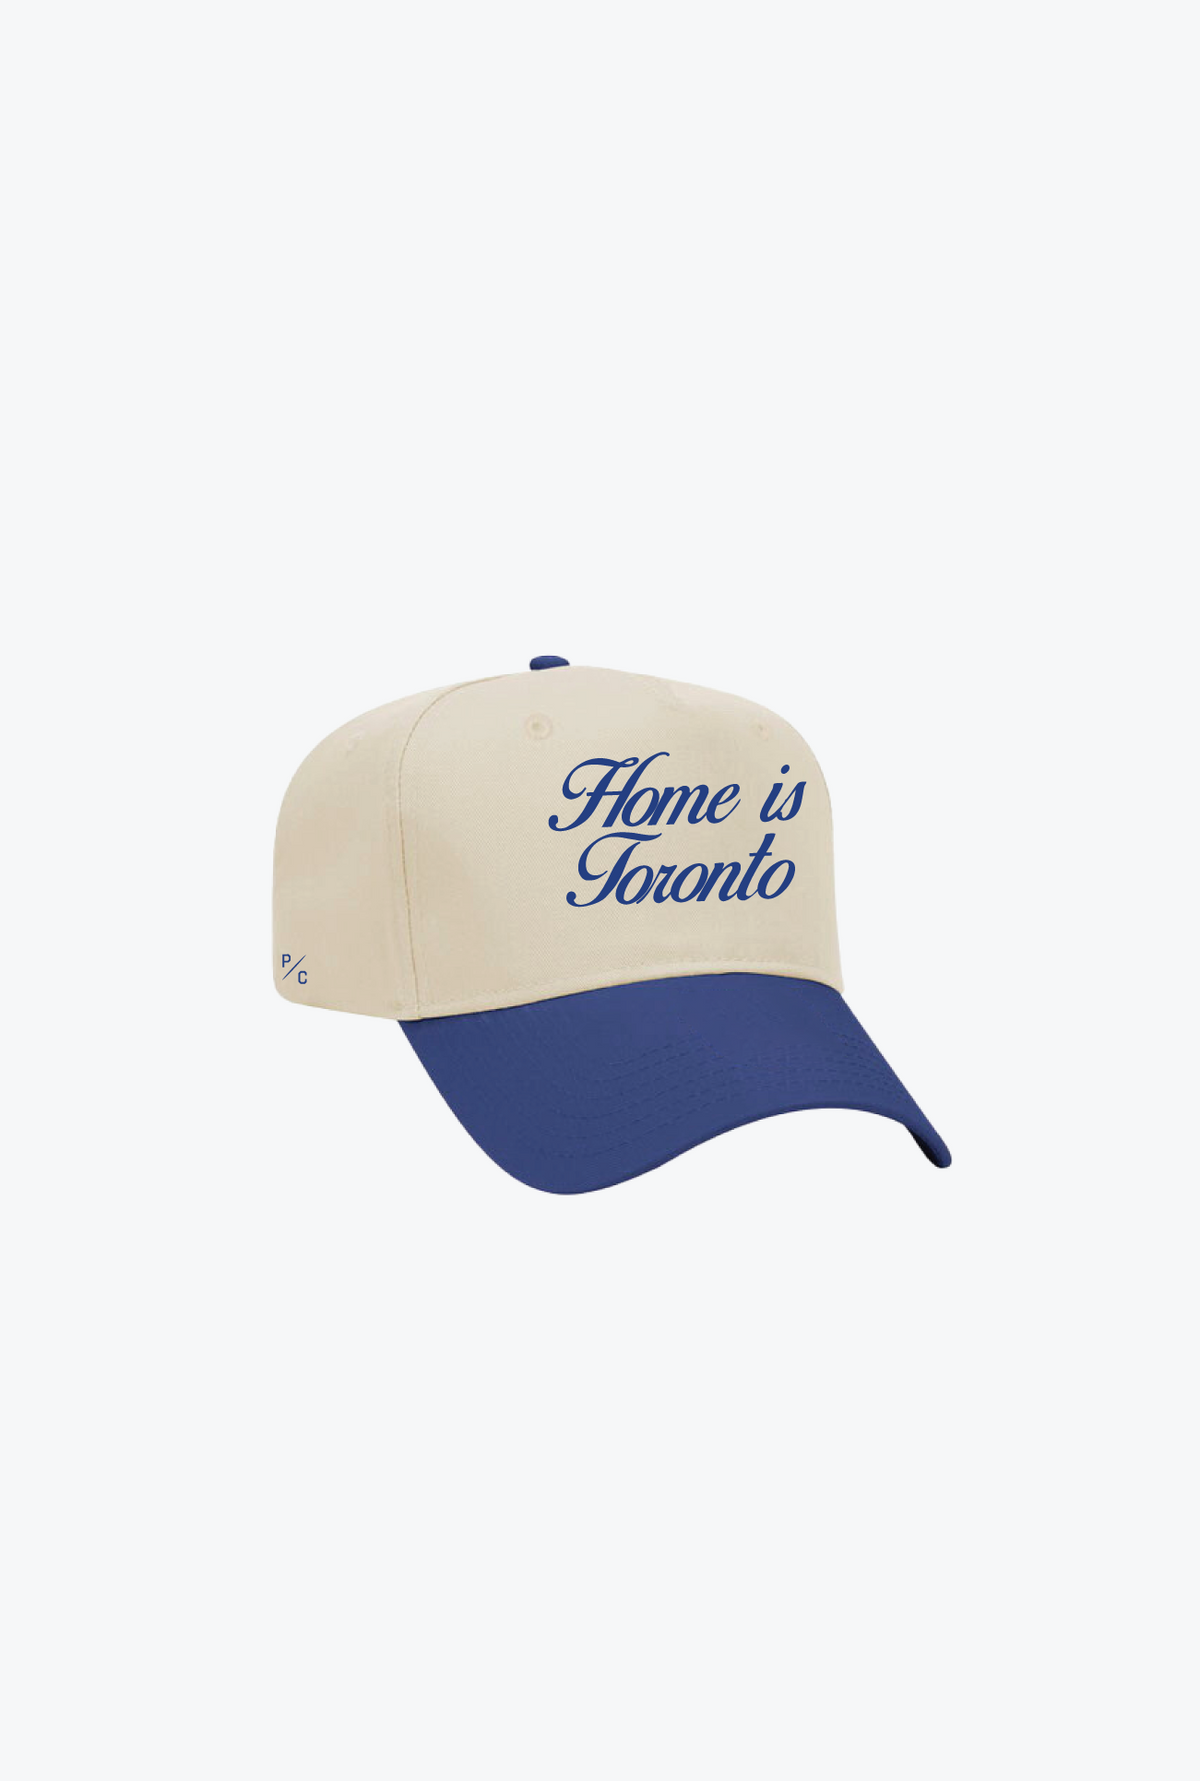 Home is Toronto A-Frame Cap - Royal/Ivory